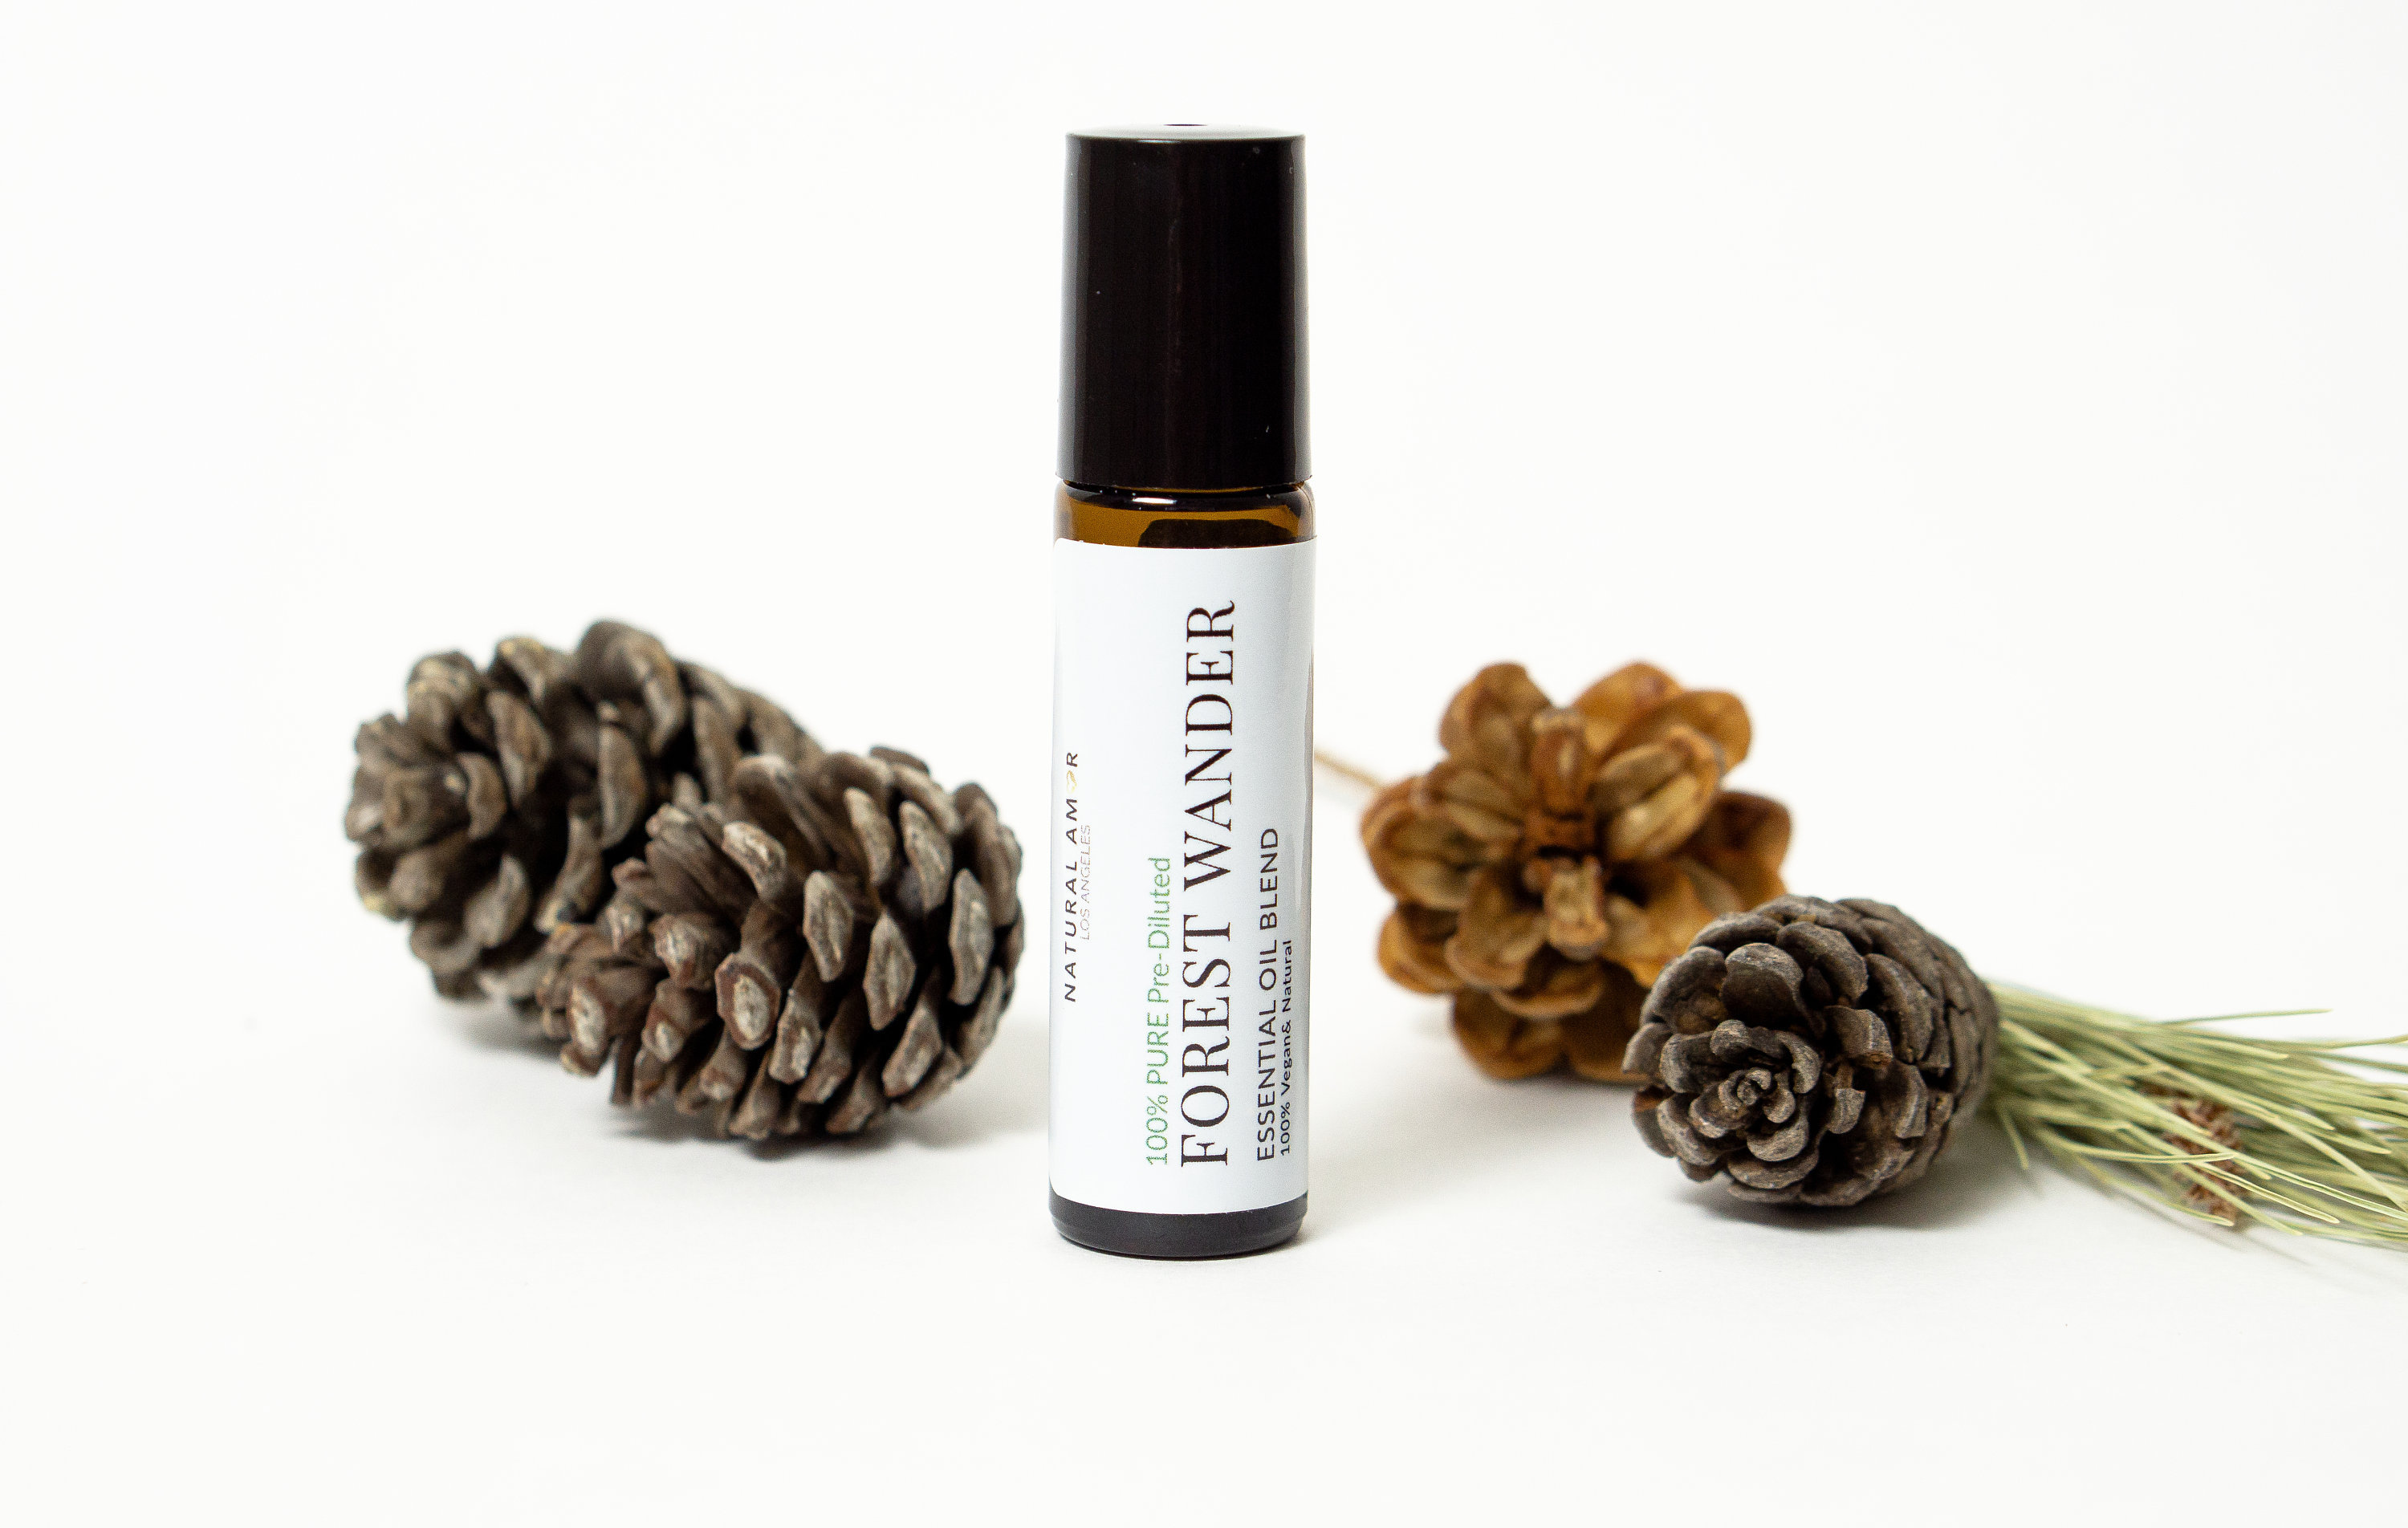 Forest Wander Essential Oil Blend Roller | Balsam Fir Tea Tree Calming Meditative Remedy Sunburn Relief Soothing Aromatherapy